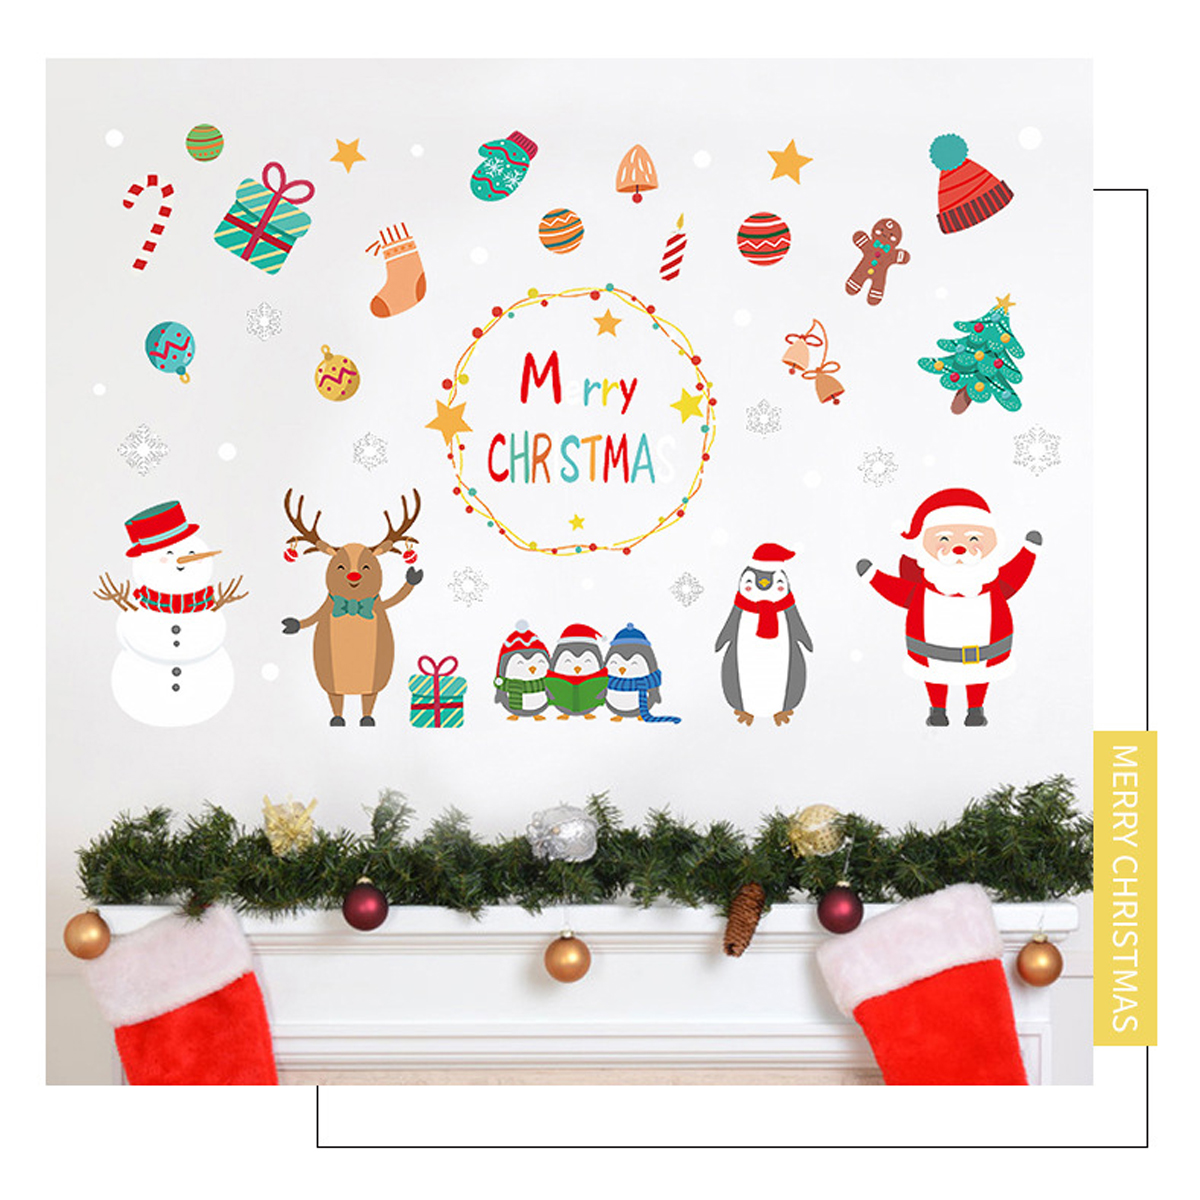 2020-Christmas-Decoration-Sticker-Glass-windows-Decals-Merry-Christmas-Home-Decoration-Wall-Stickers-1764899-4